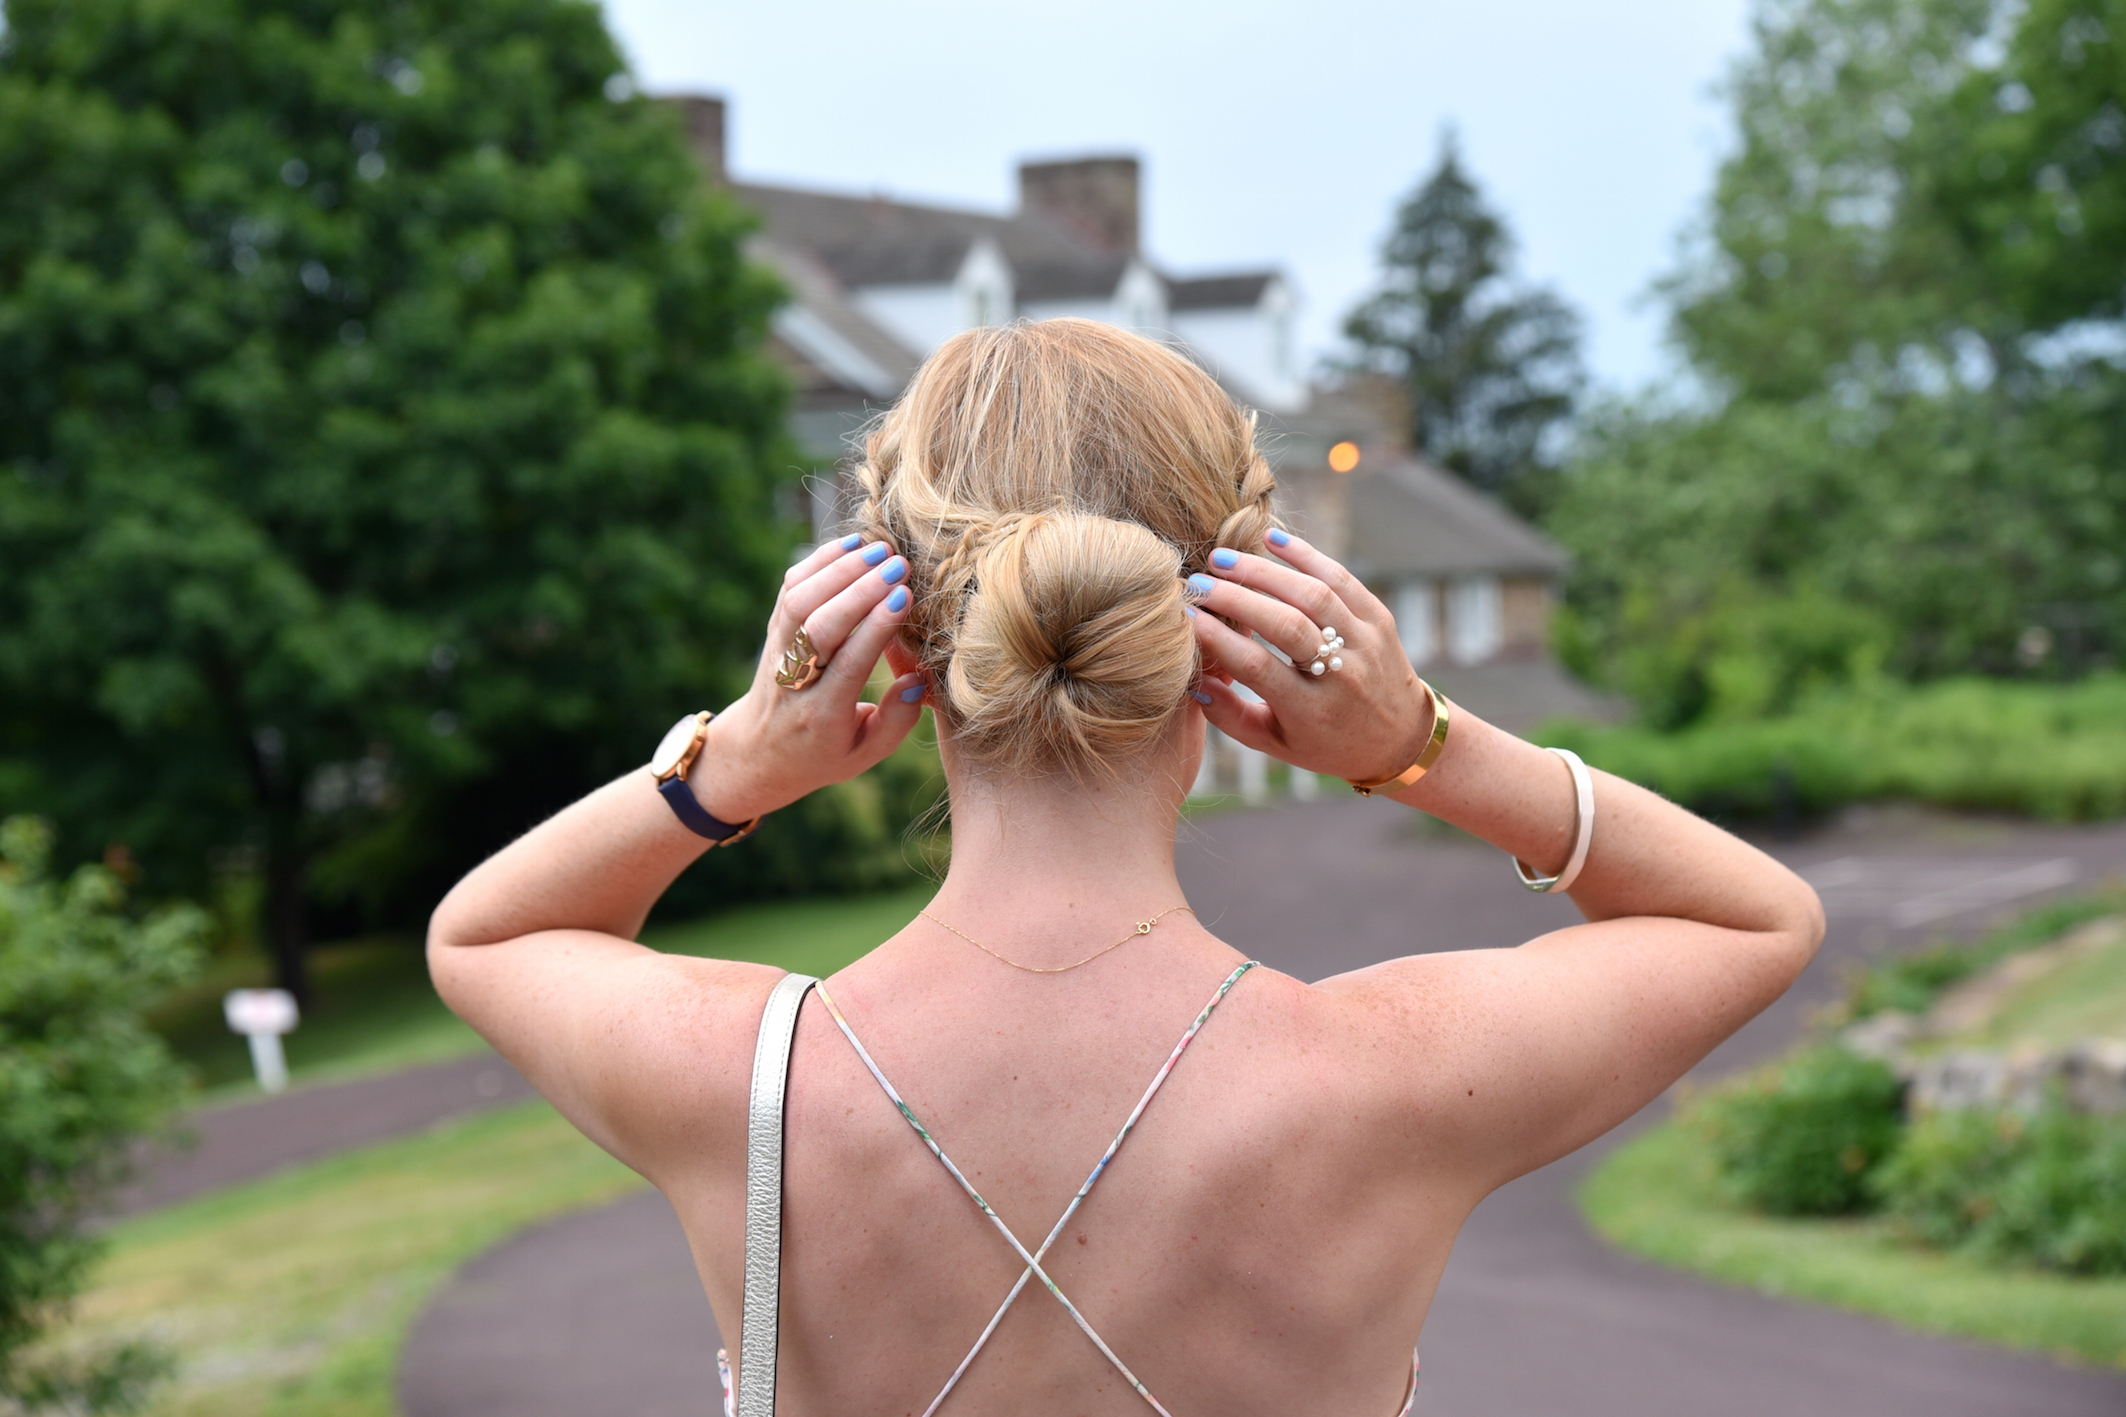 Hairstyle idea for a Summer Wedding Style blogger Mybigapplecity